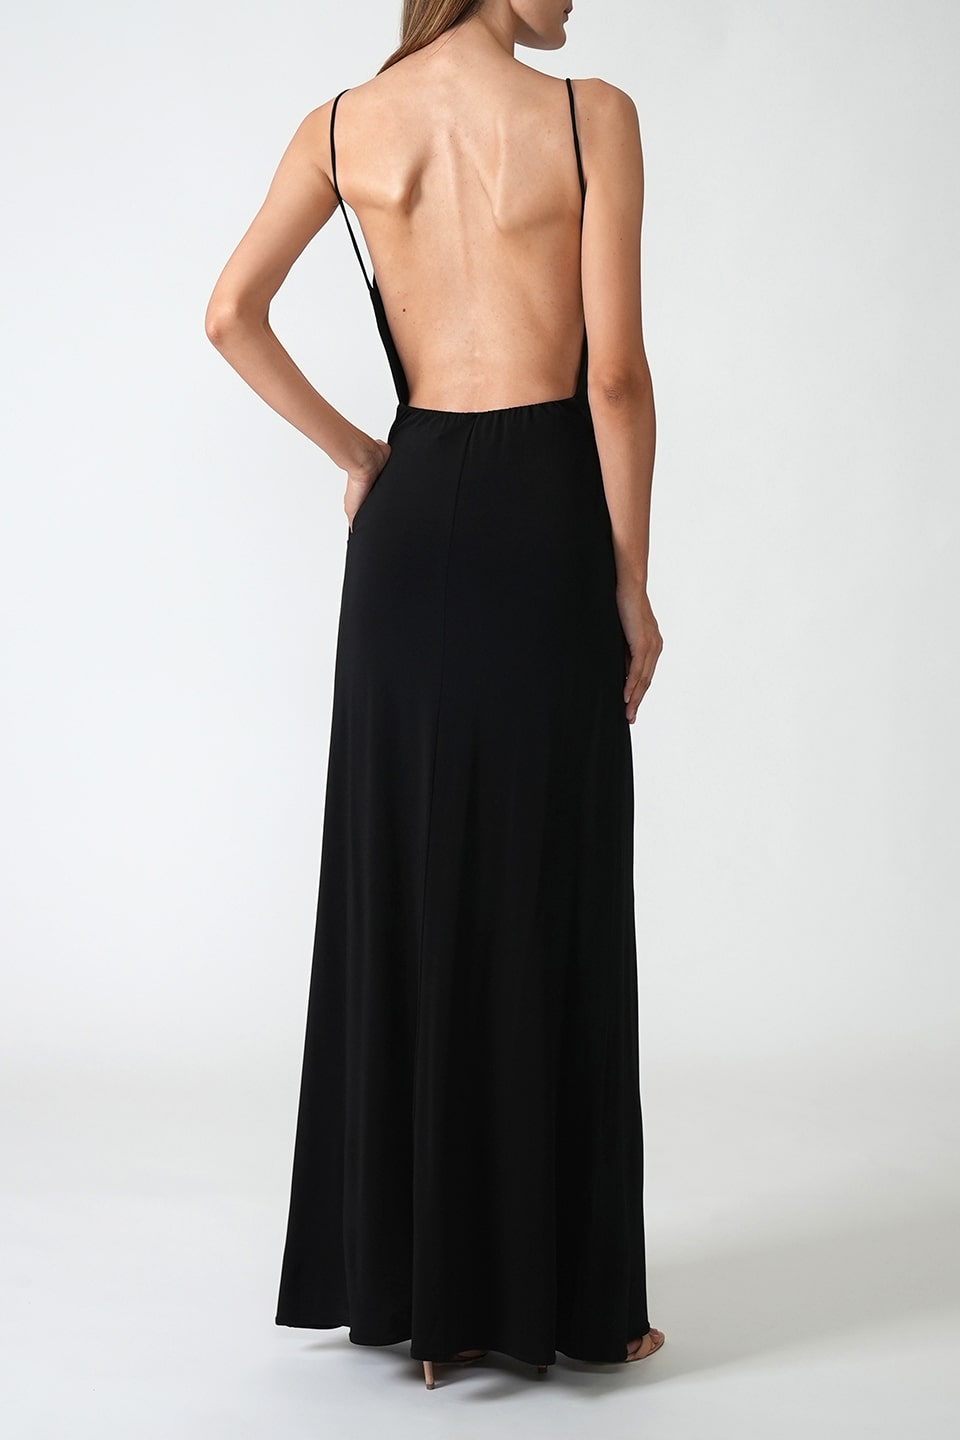 Buy Black Backless Maxi Dress Online - Label Ritu Kumar India Store View